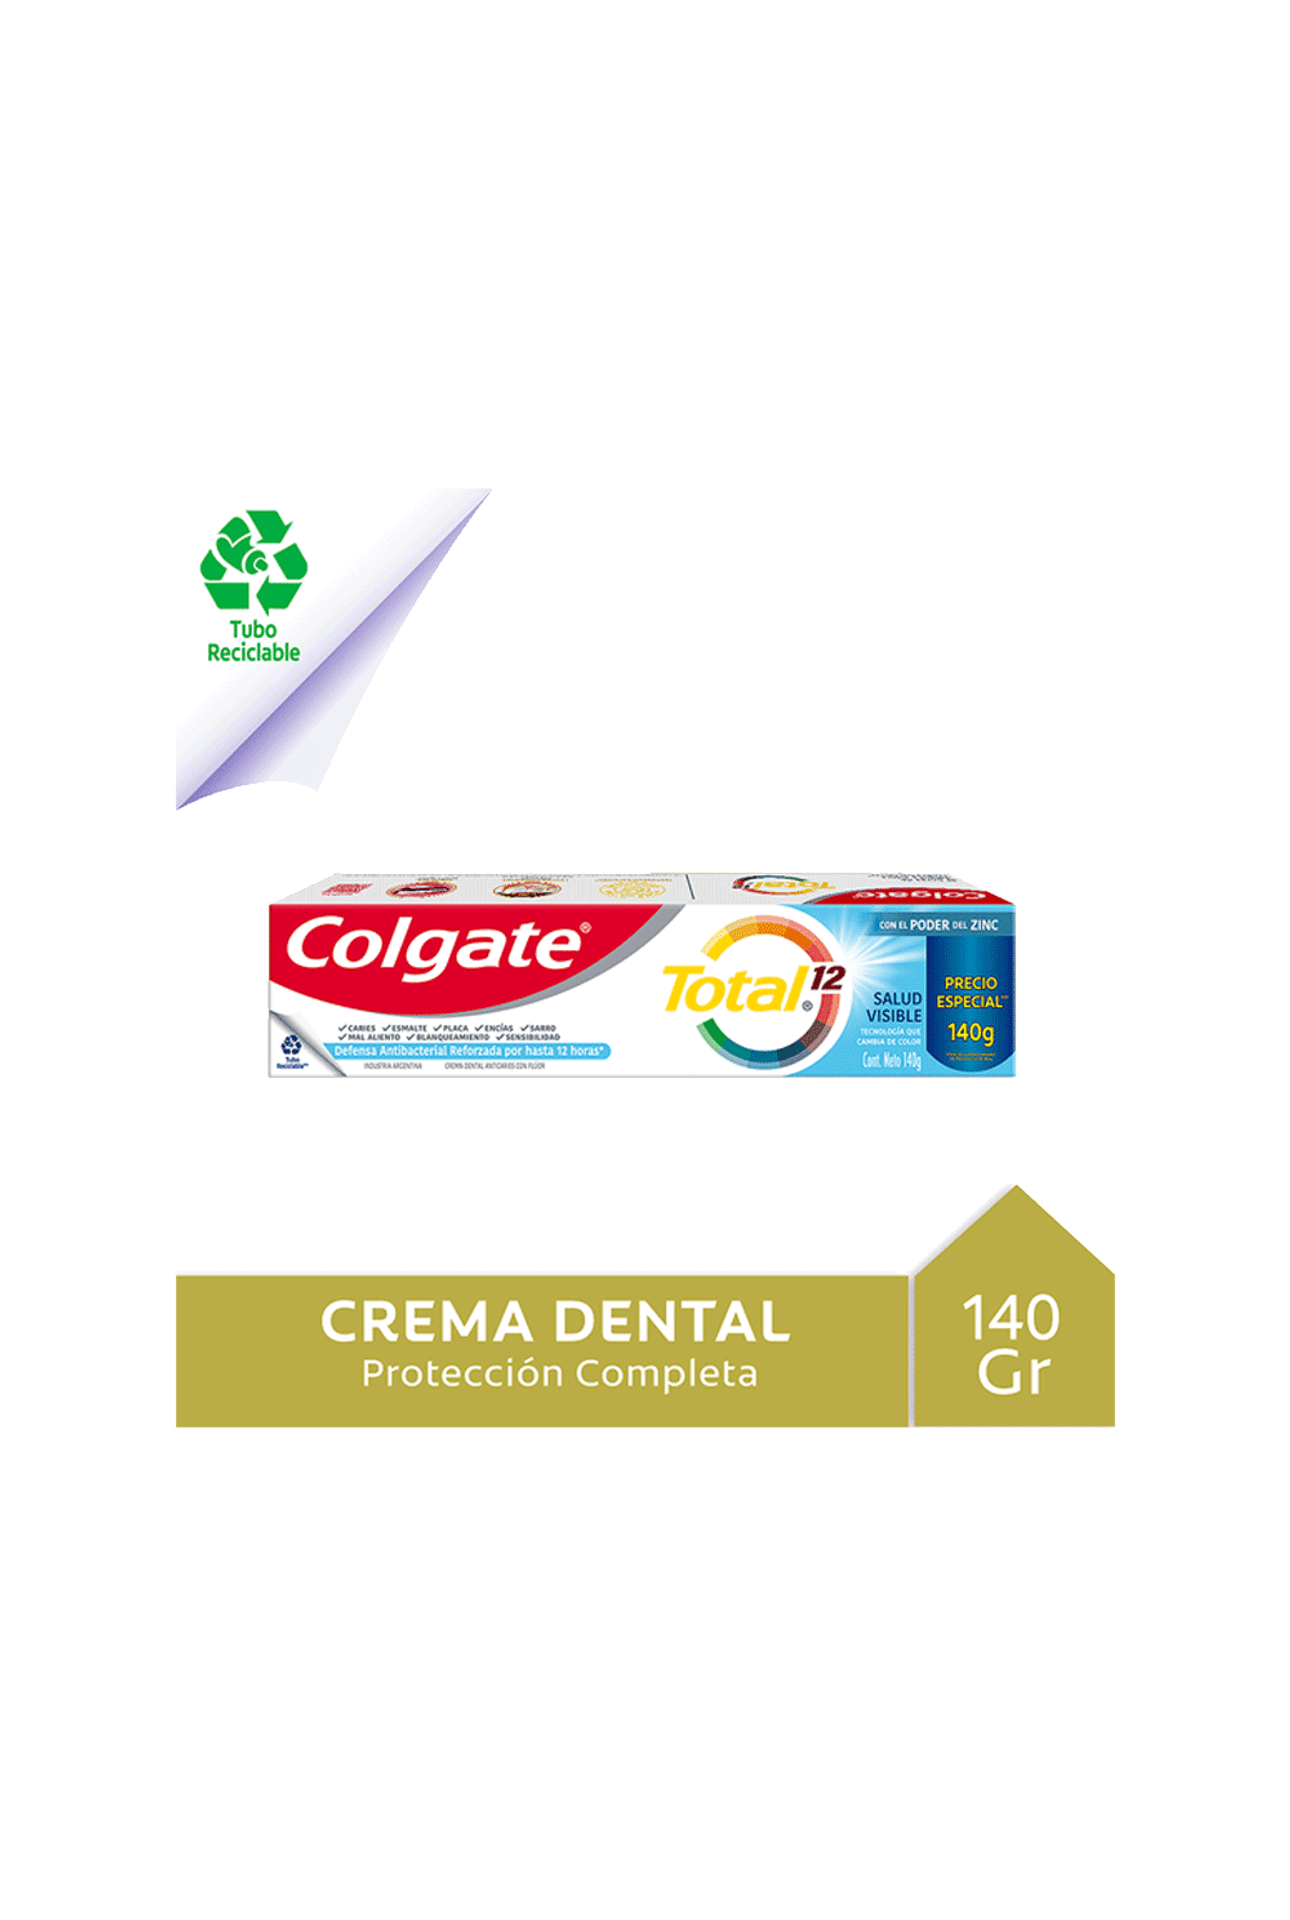 Colgate-Crema-Dental-Colgate-Total-12-Visible-Health-Tubo-Reciclable-7509546679341_img1